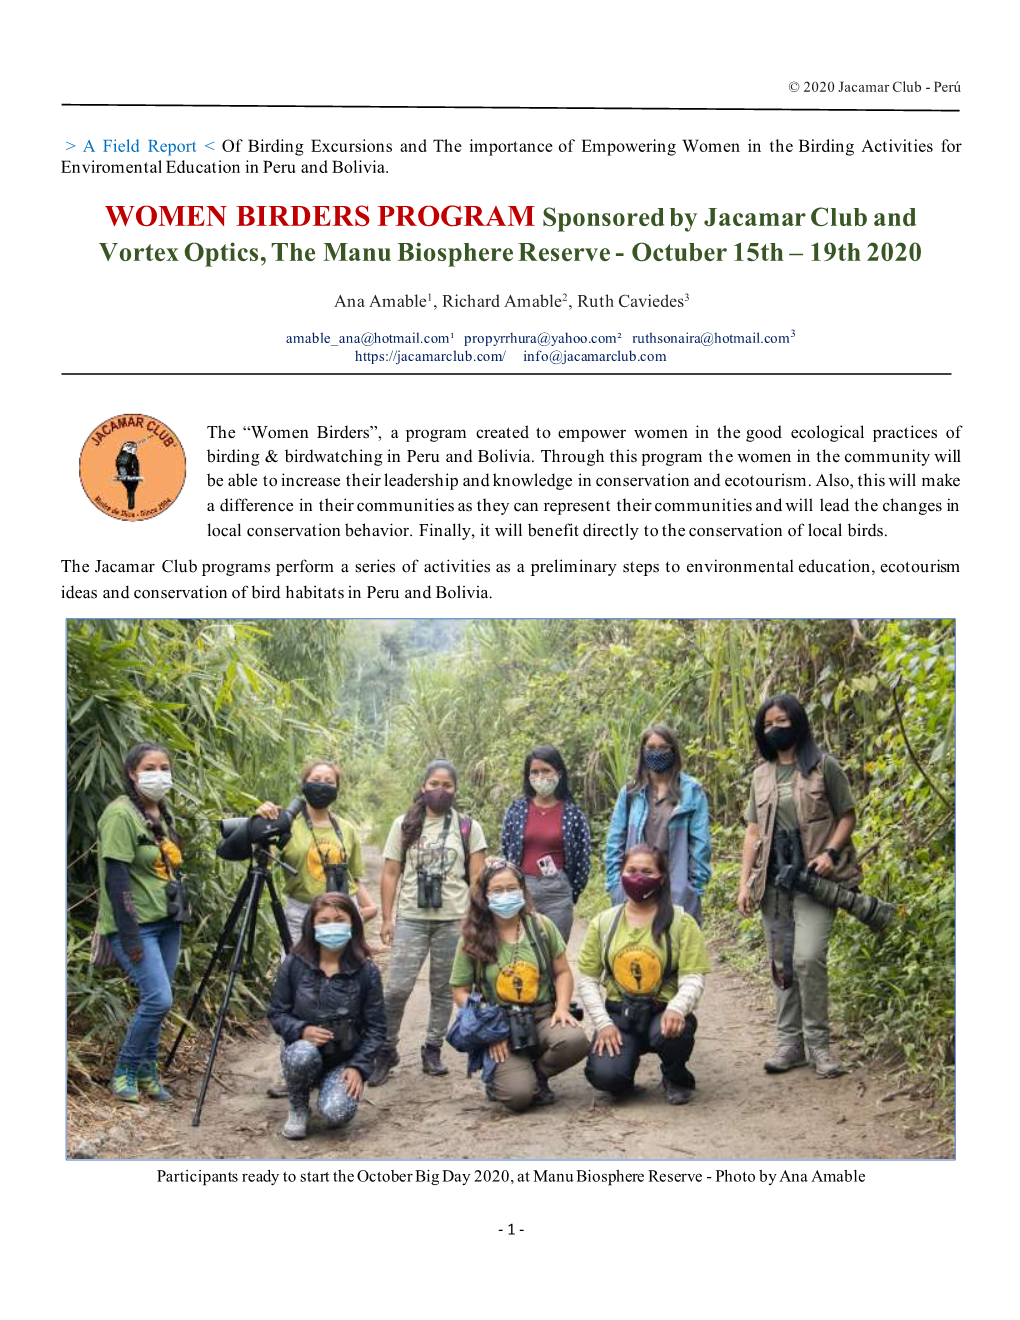 WOMEN BIRDERS PROGRAM Sponsored by Jacamar Club and Vortex Optics, the Manu Biosphere Reserve - Octuber 15Th – 19Th 2020